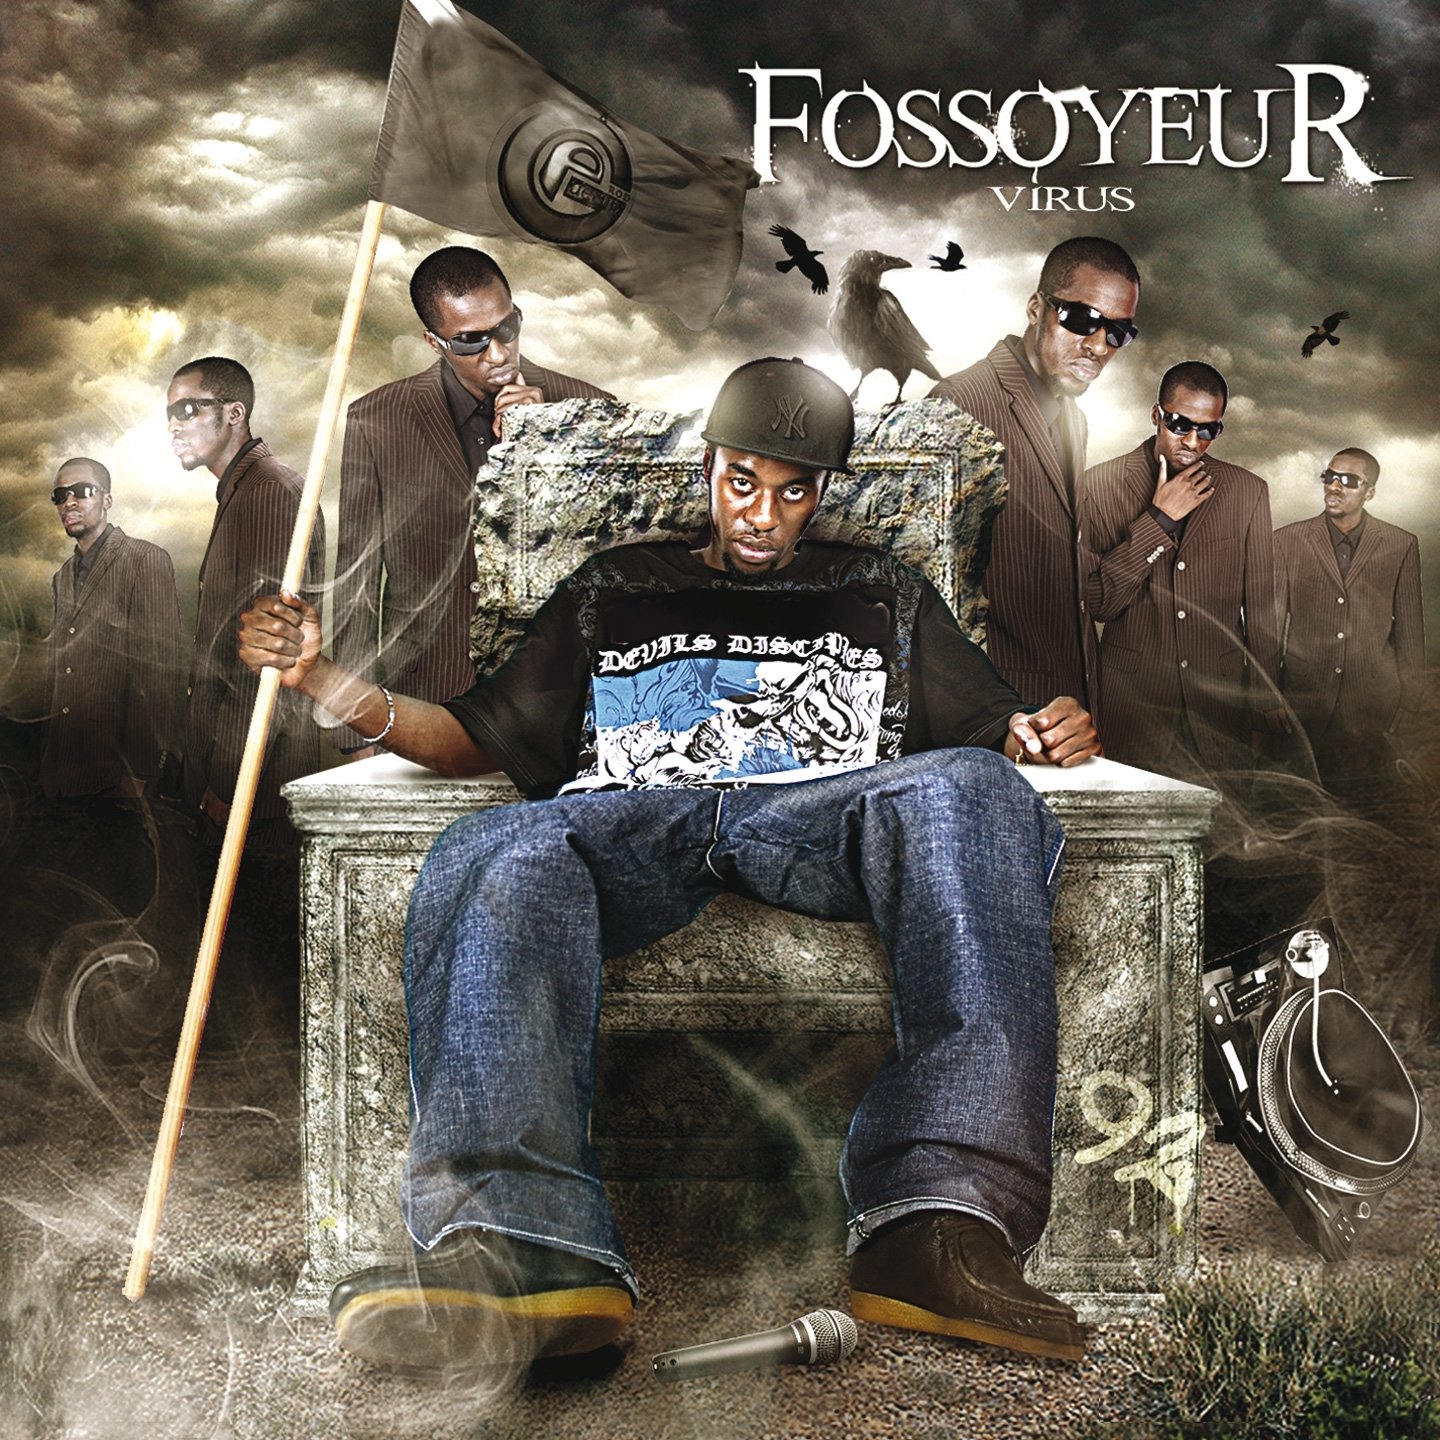 Fossoyeur-Virus-FR-CD-FLAC-2010-Mrflac Download